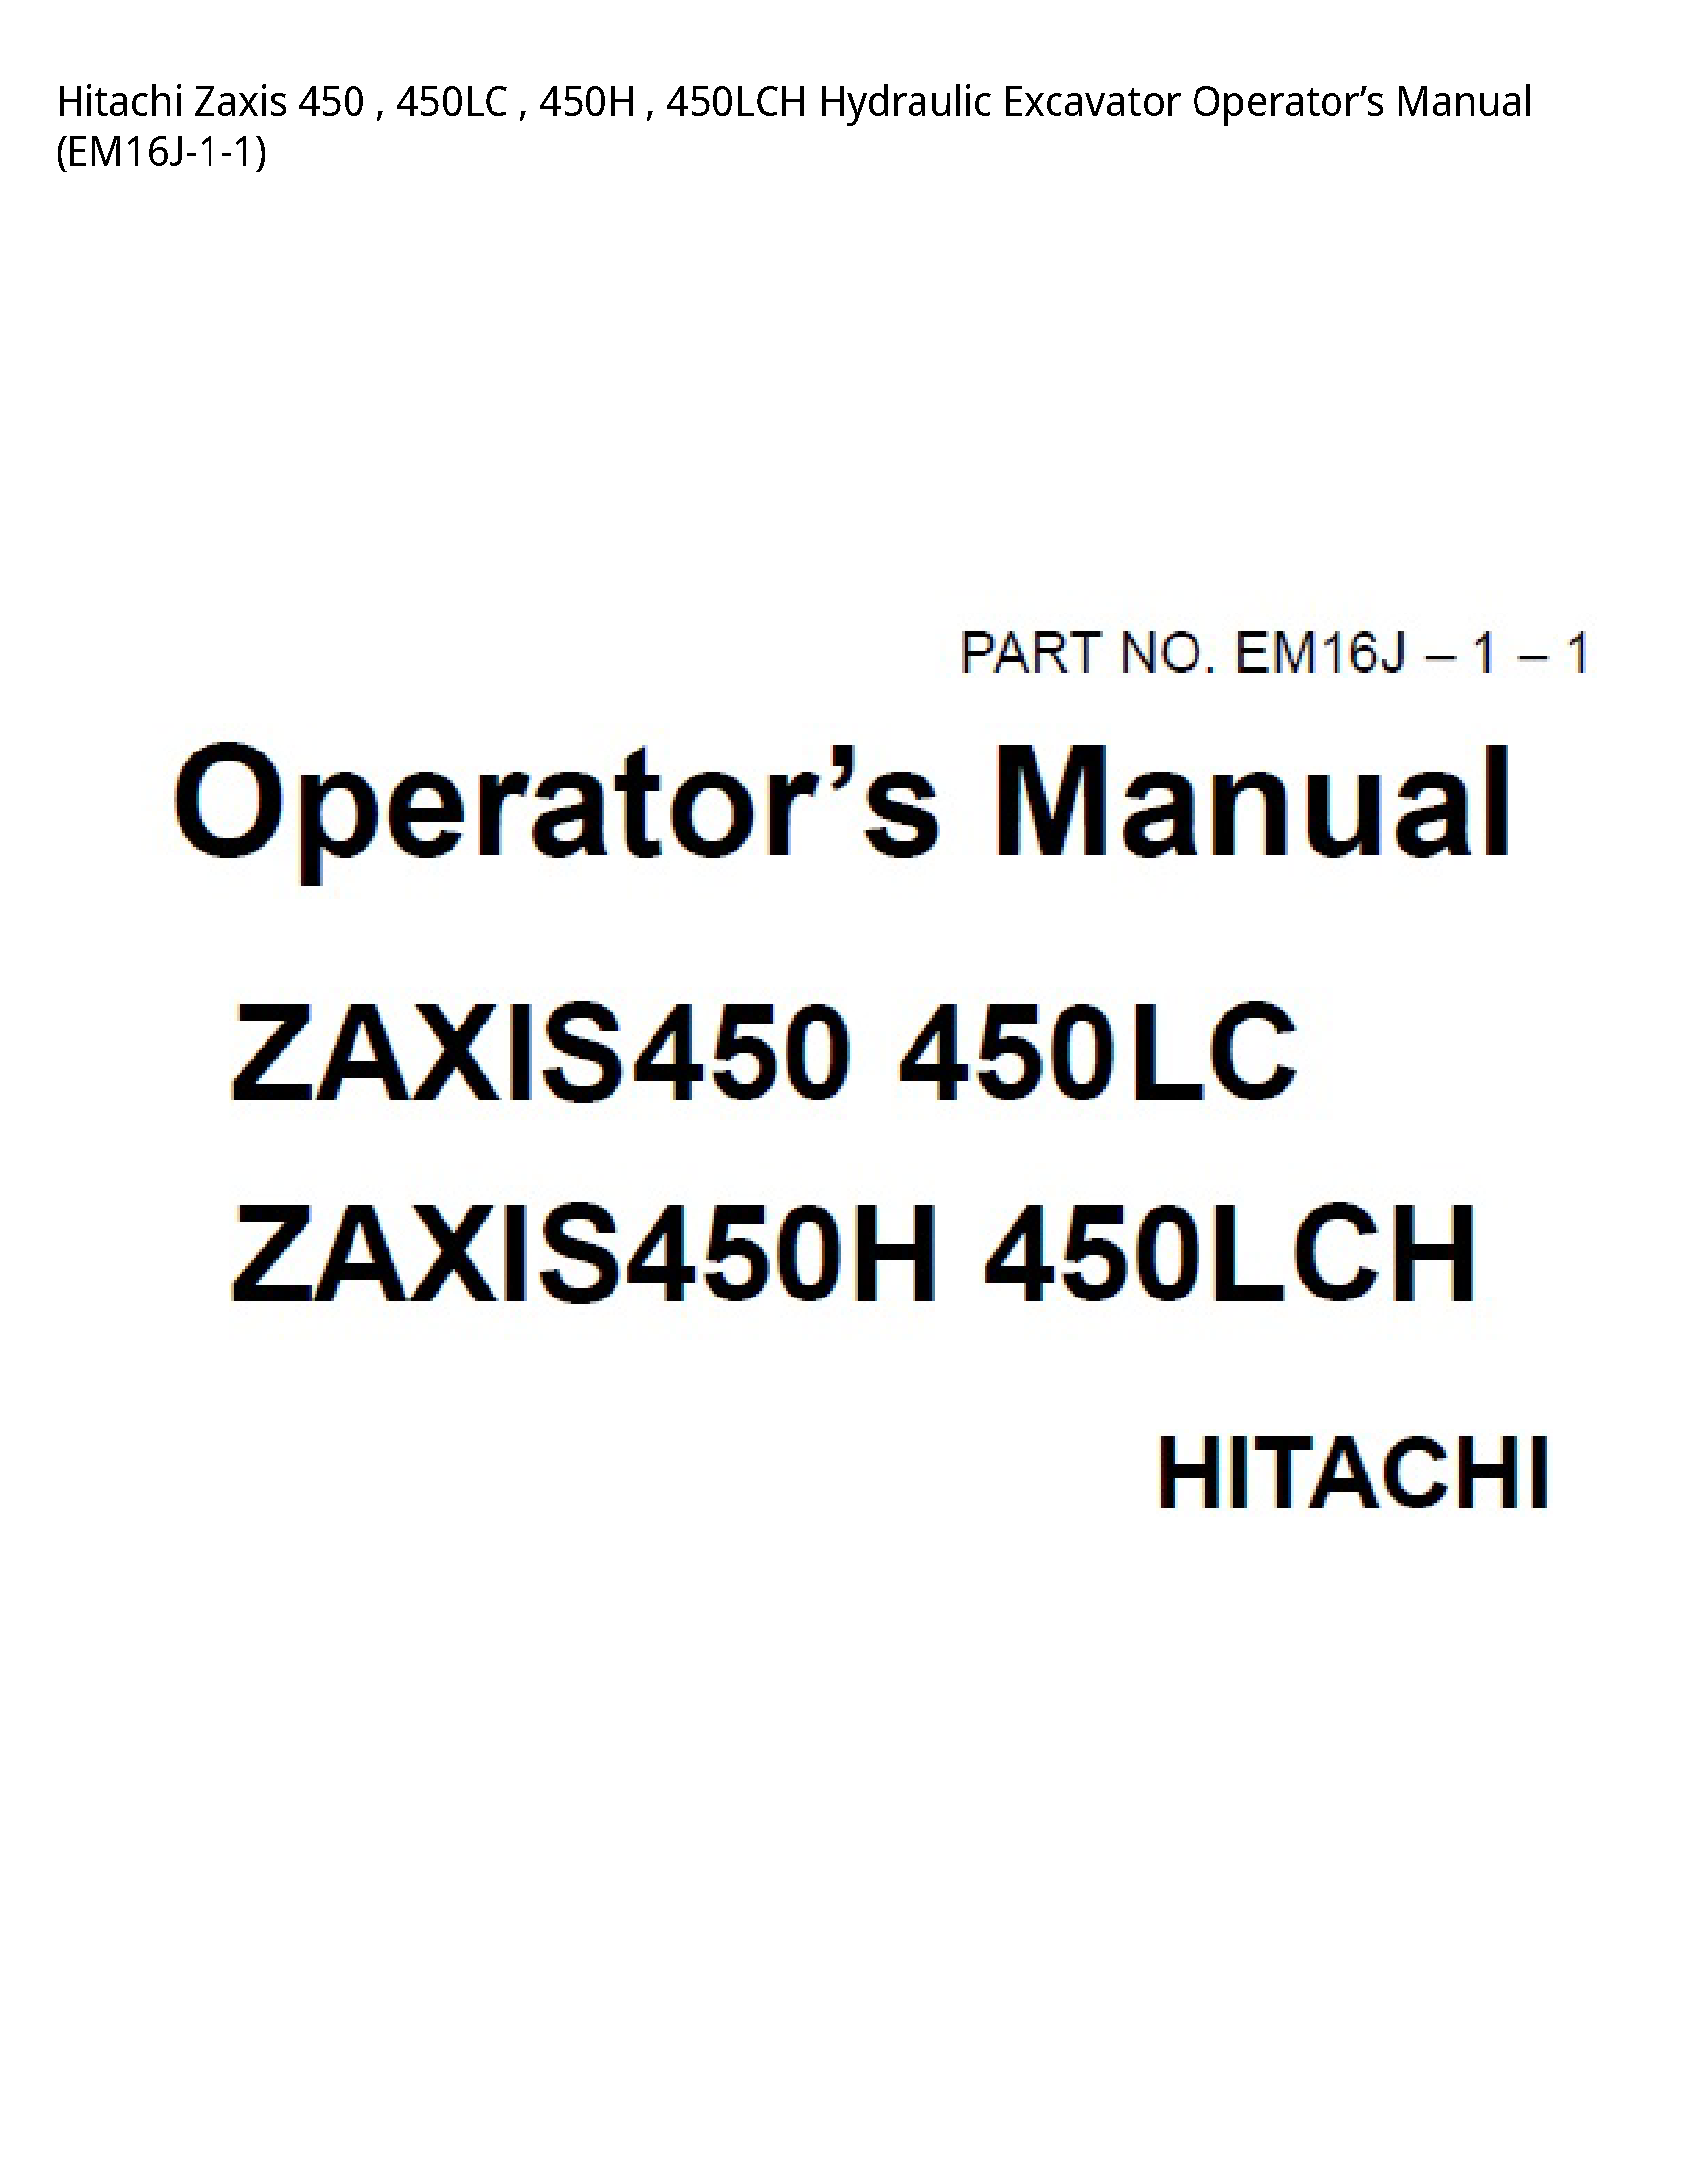 Hitachi 450 Zaxis Hydraulic Excavator Operator’s manual